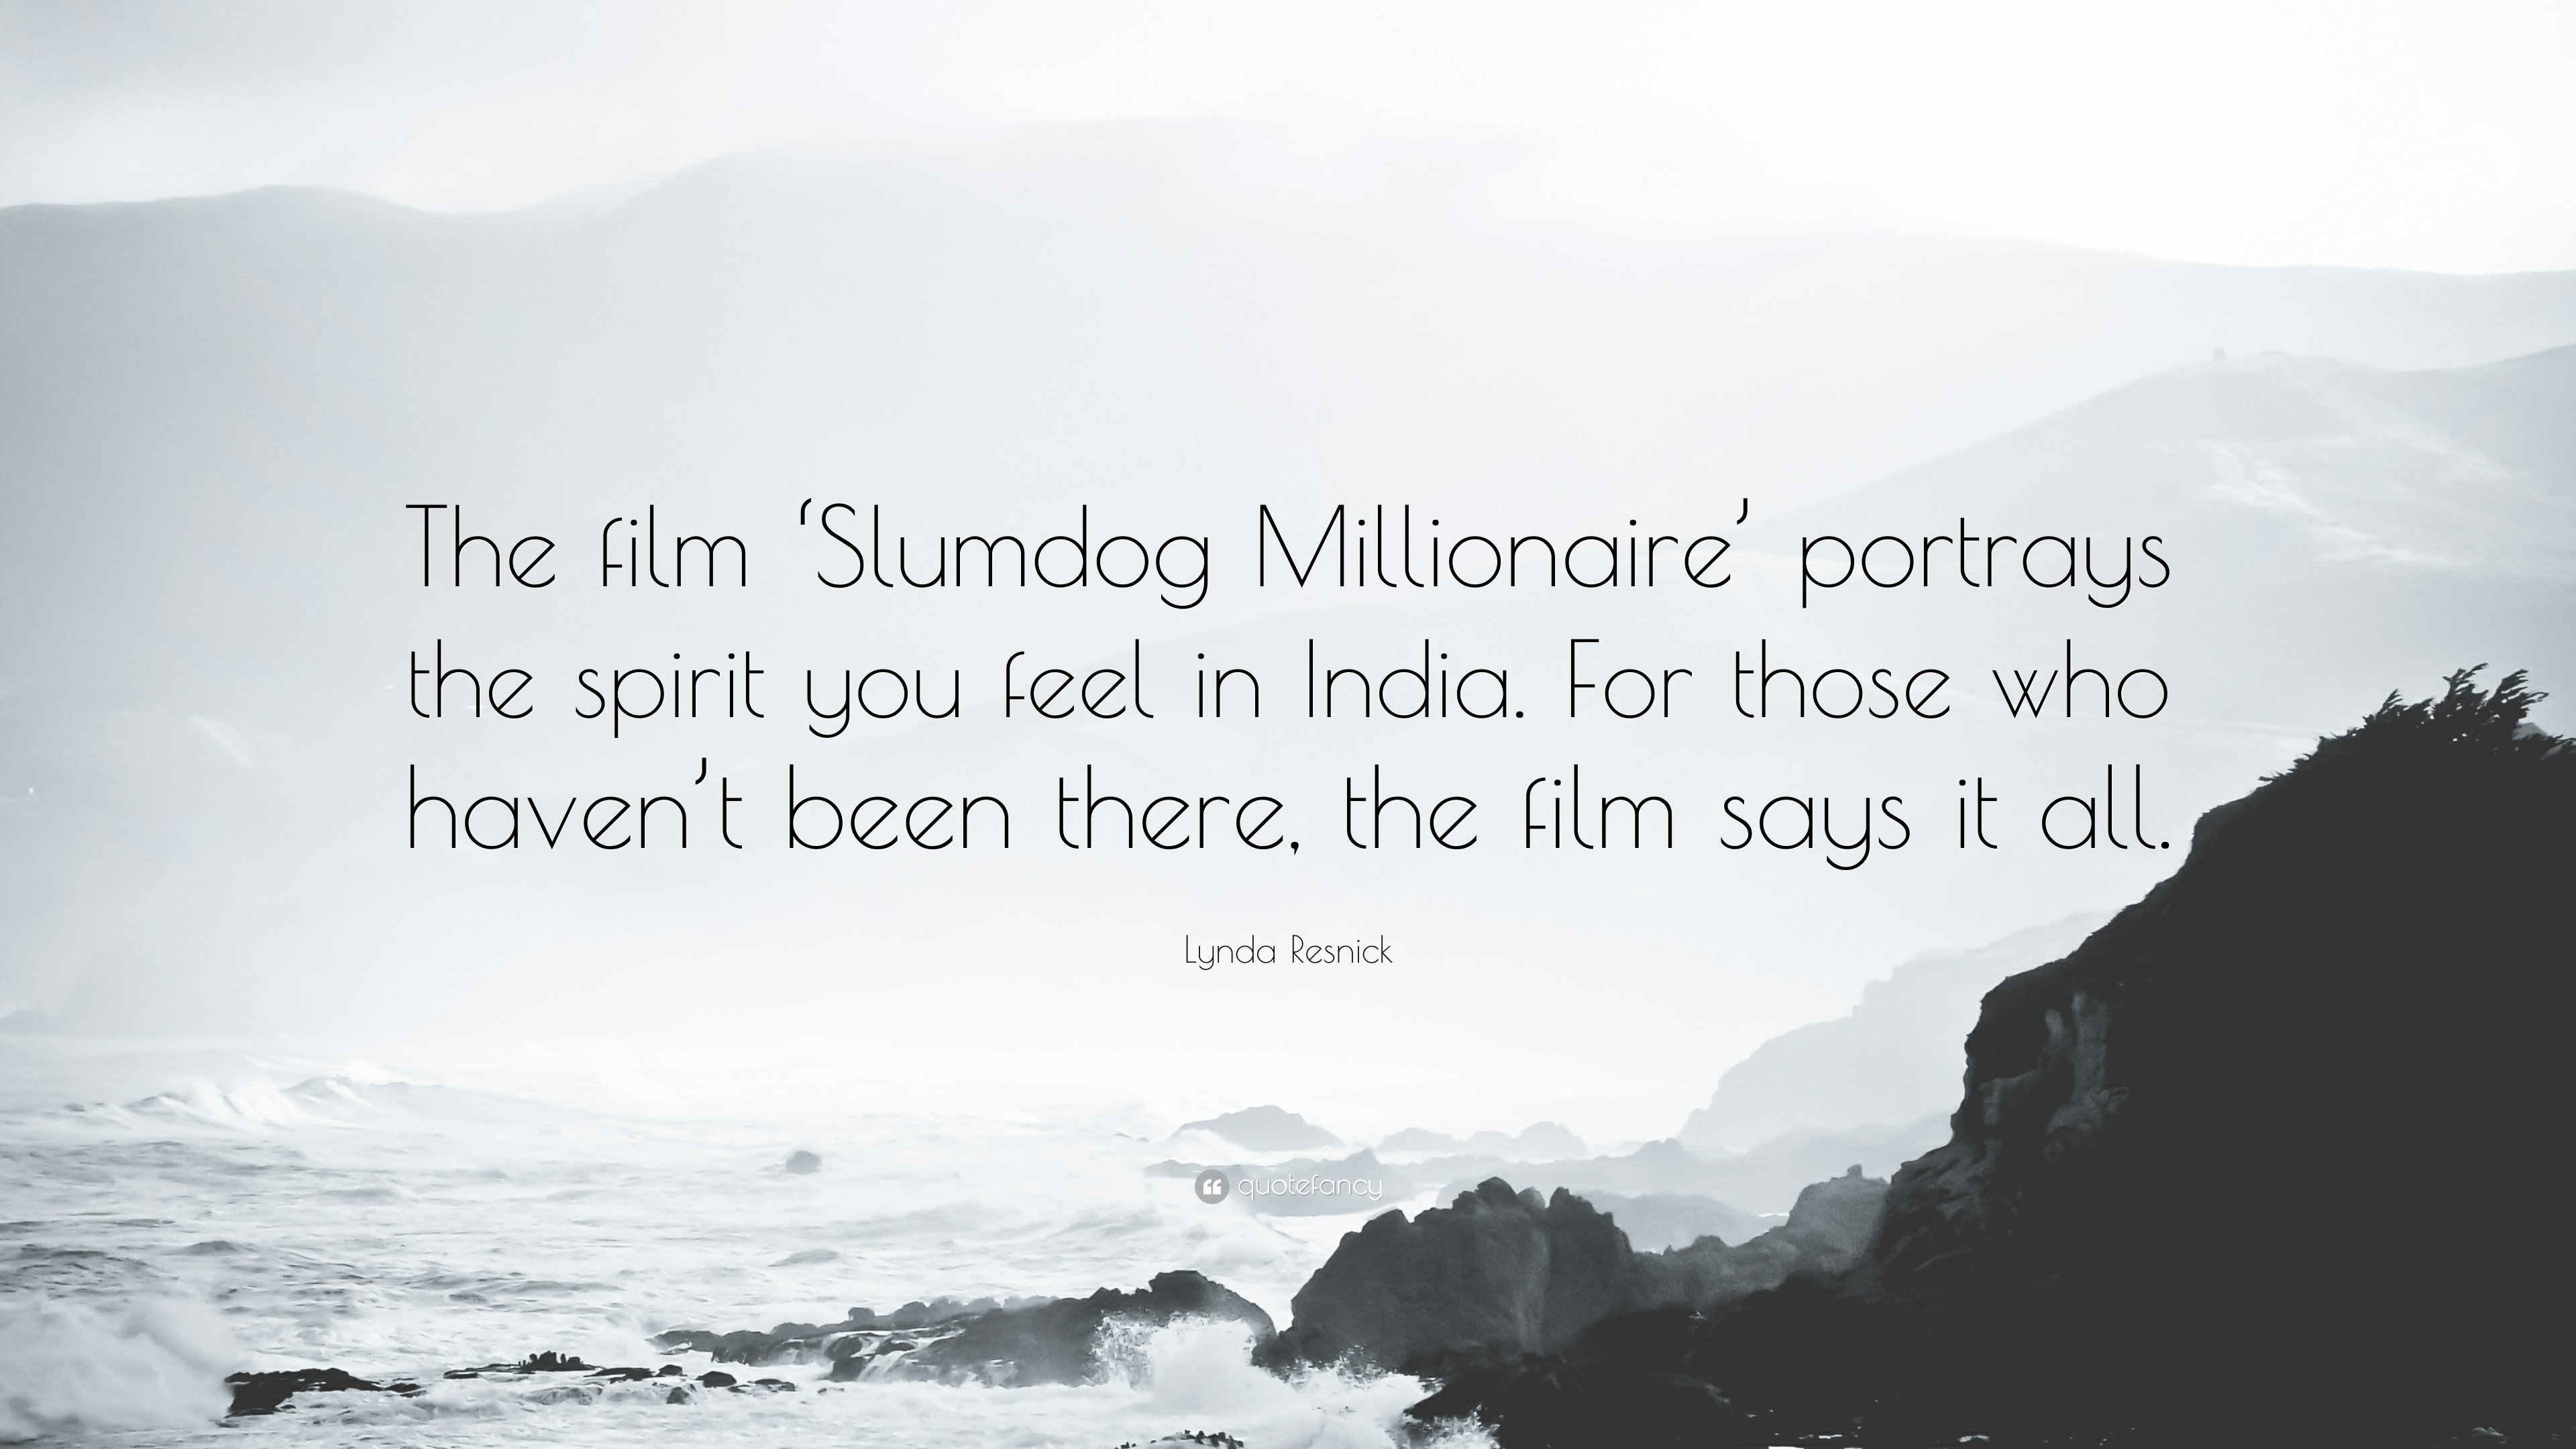 Lynda Resnick Quote: “The film 'Slumdog Millionaire' portrays